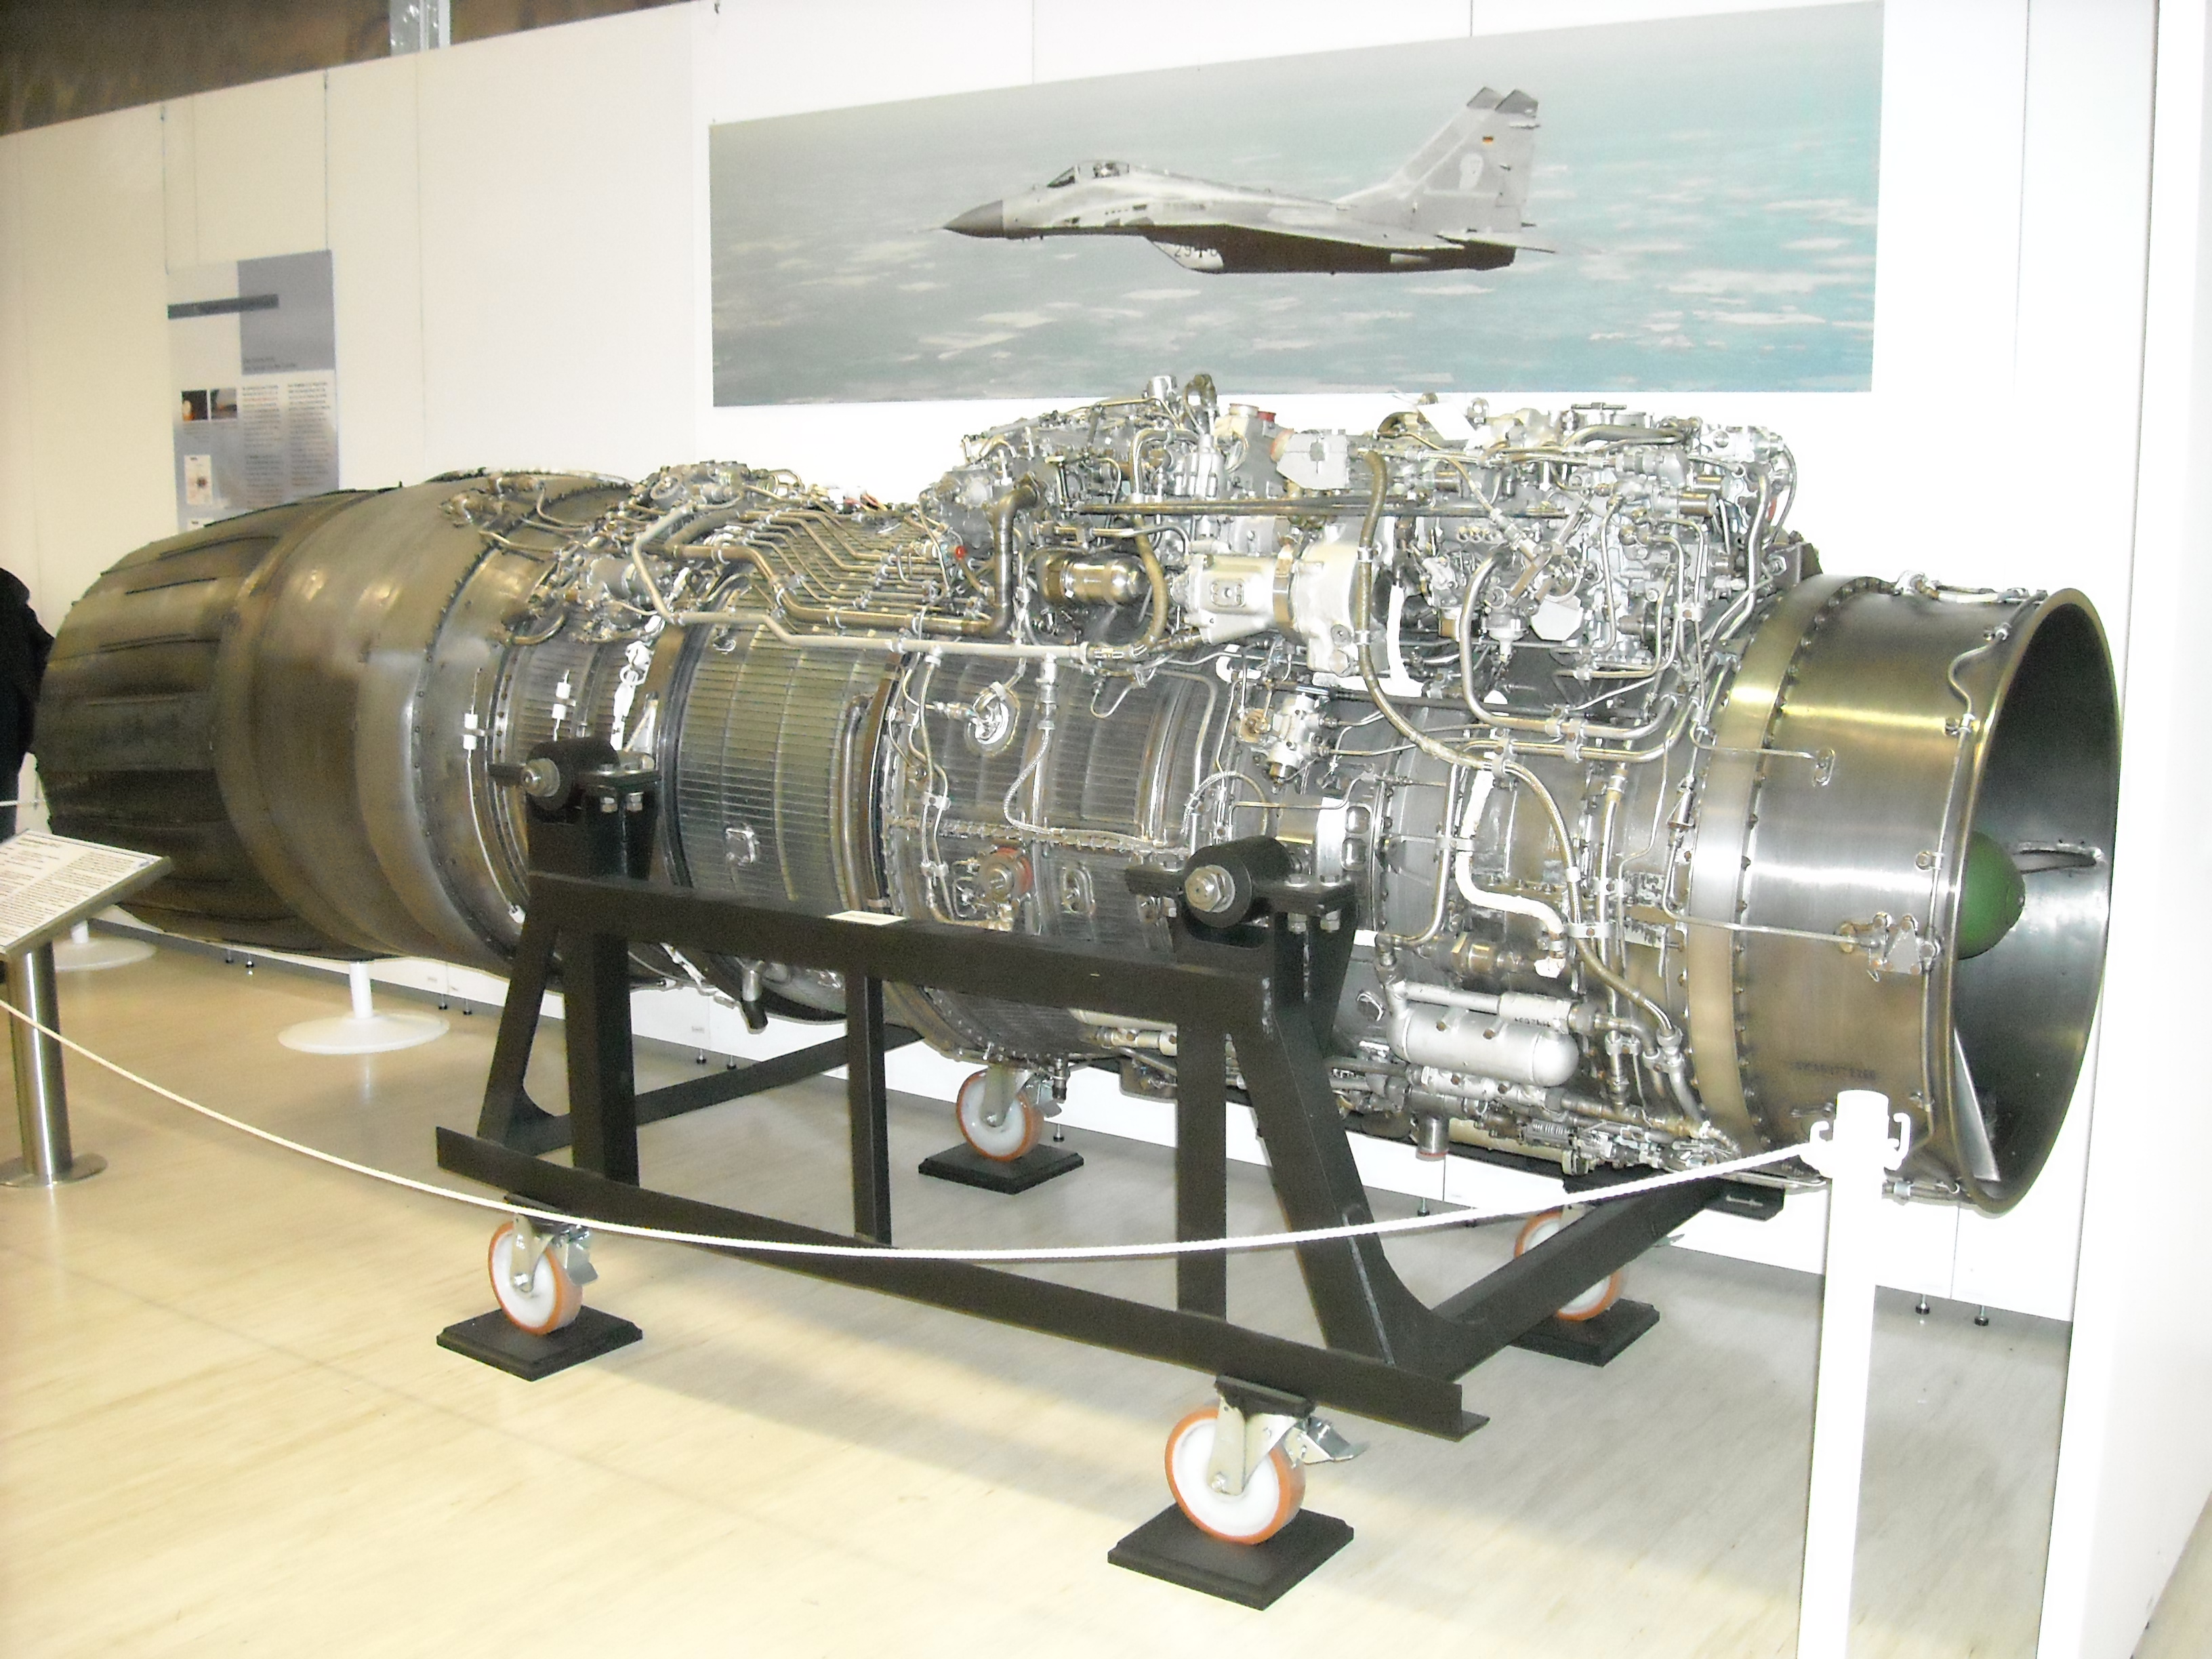 Klimov_RD-33_turbofan_engine.JPG